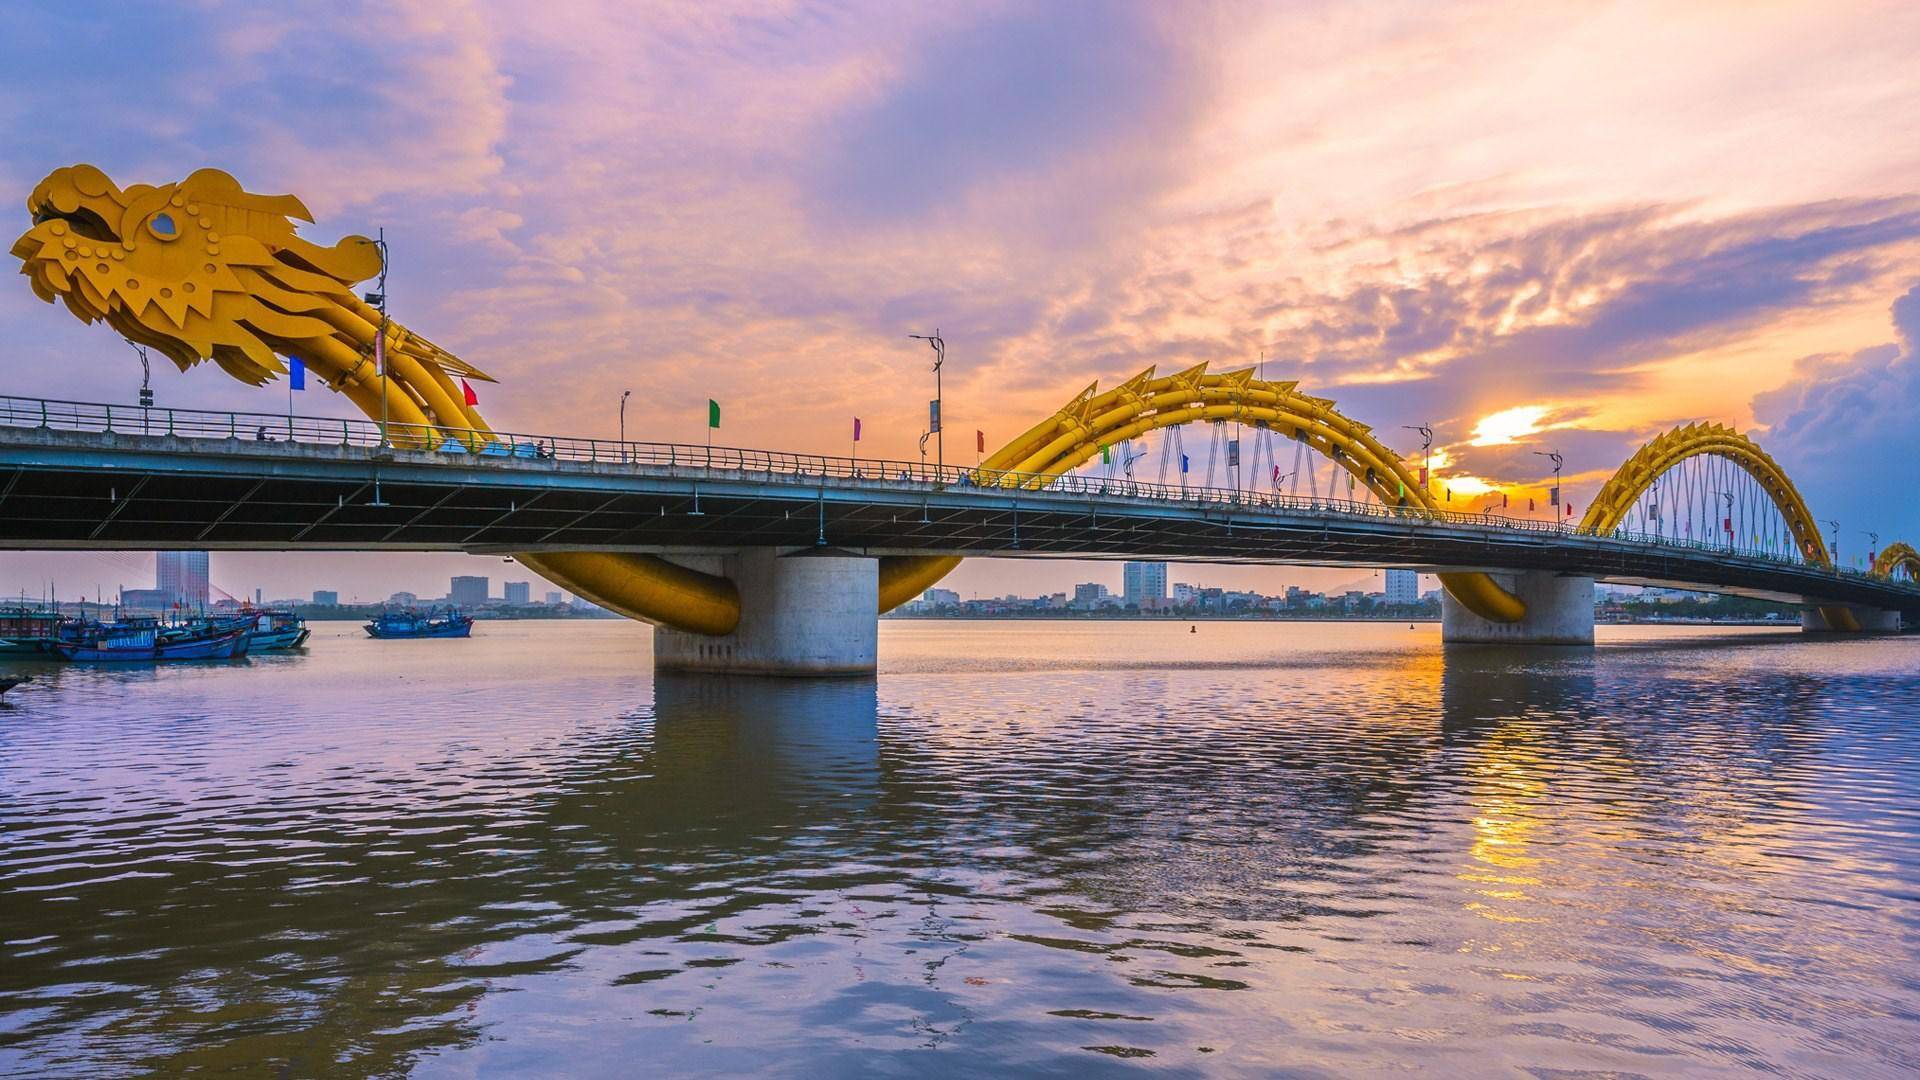 "fire-breathing" dragon bridge in vietnam - da nang travel tips